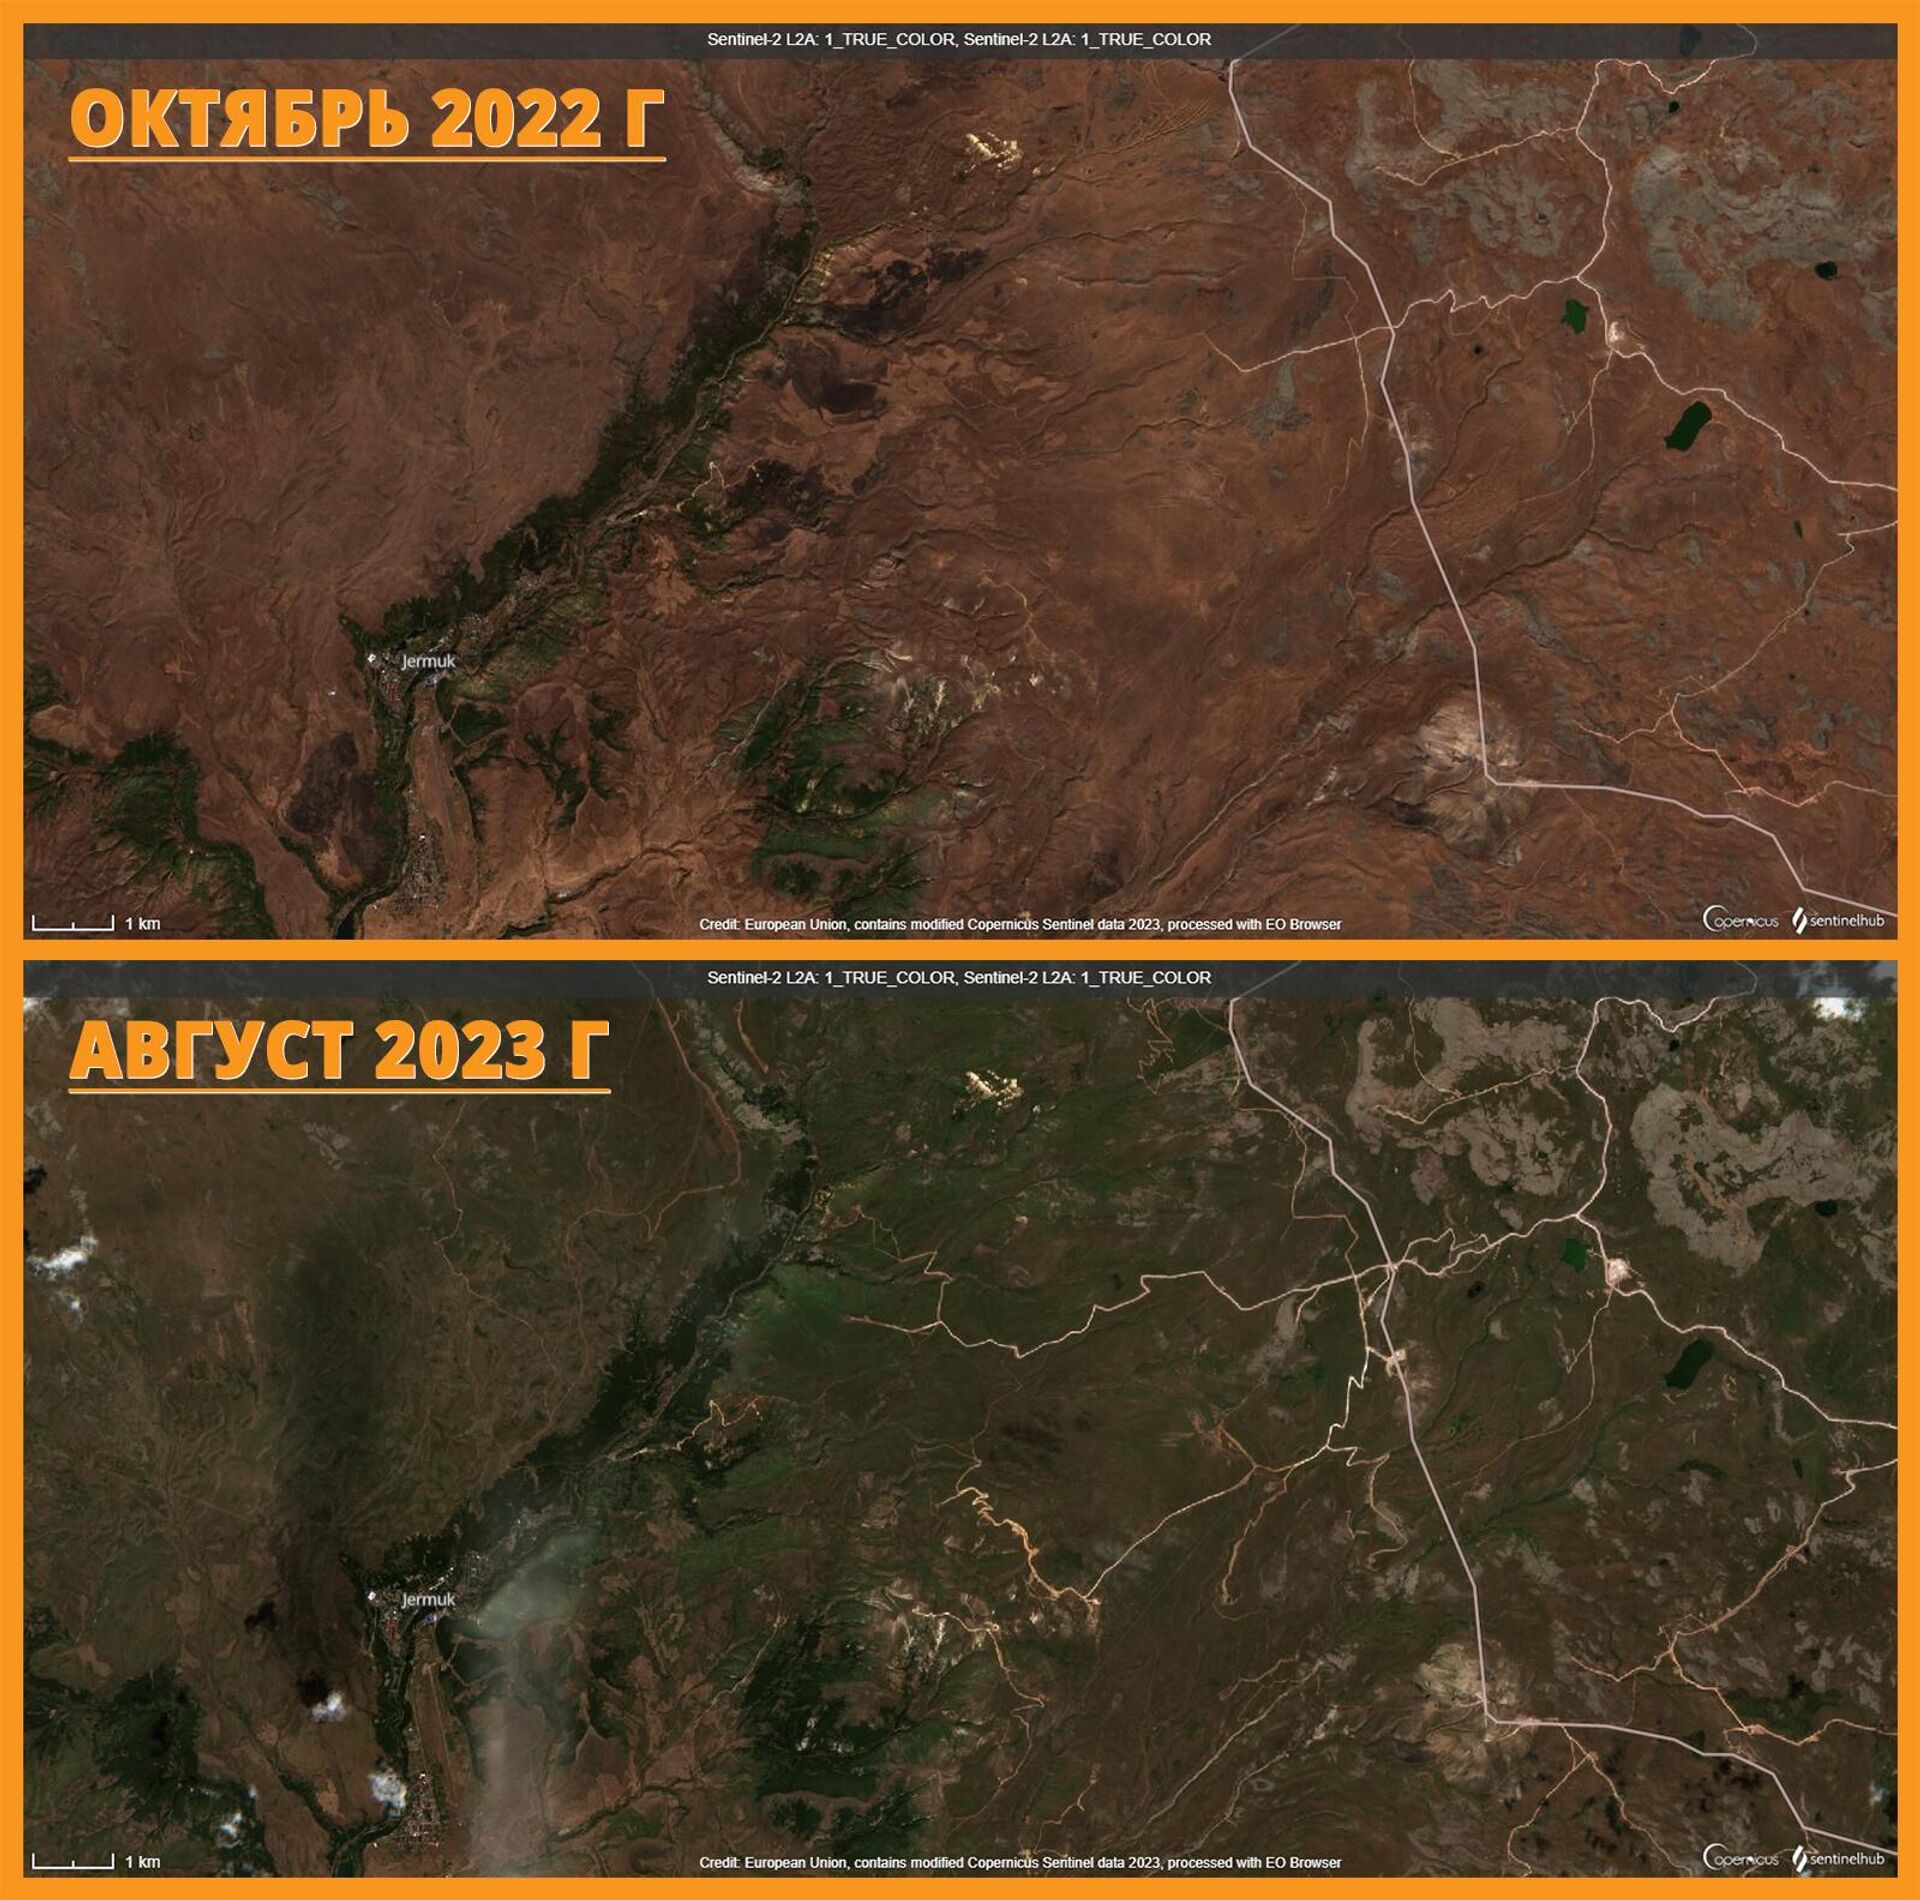 Снимки со спутника Sentinel-2 - октябрь 2022 г и август 2023 г. - Sputnik Армения, 1920, 07.09.2023